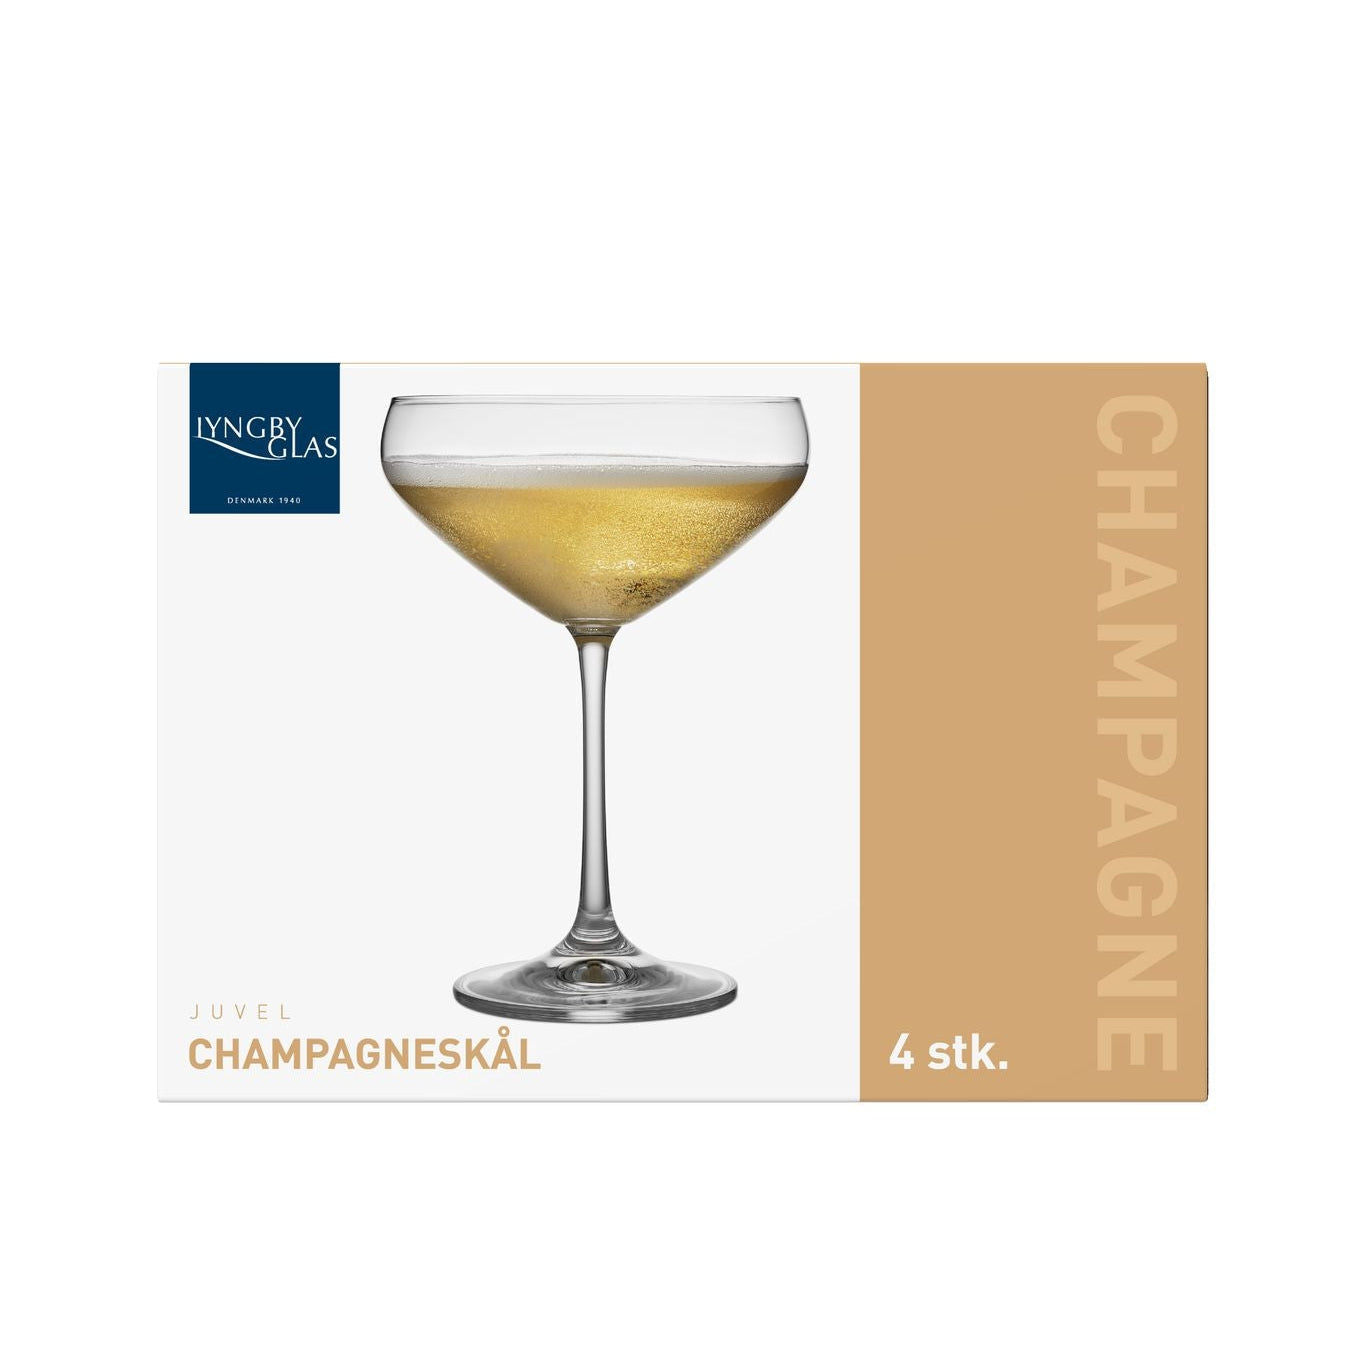 Lyngby Glas Juvel Champagne Bowl 34 Cl, 4 ks.